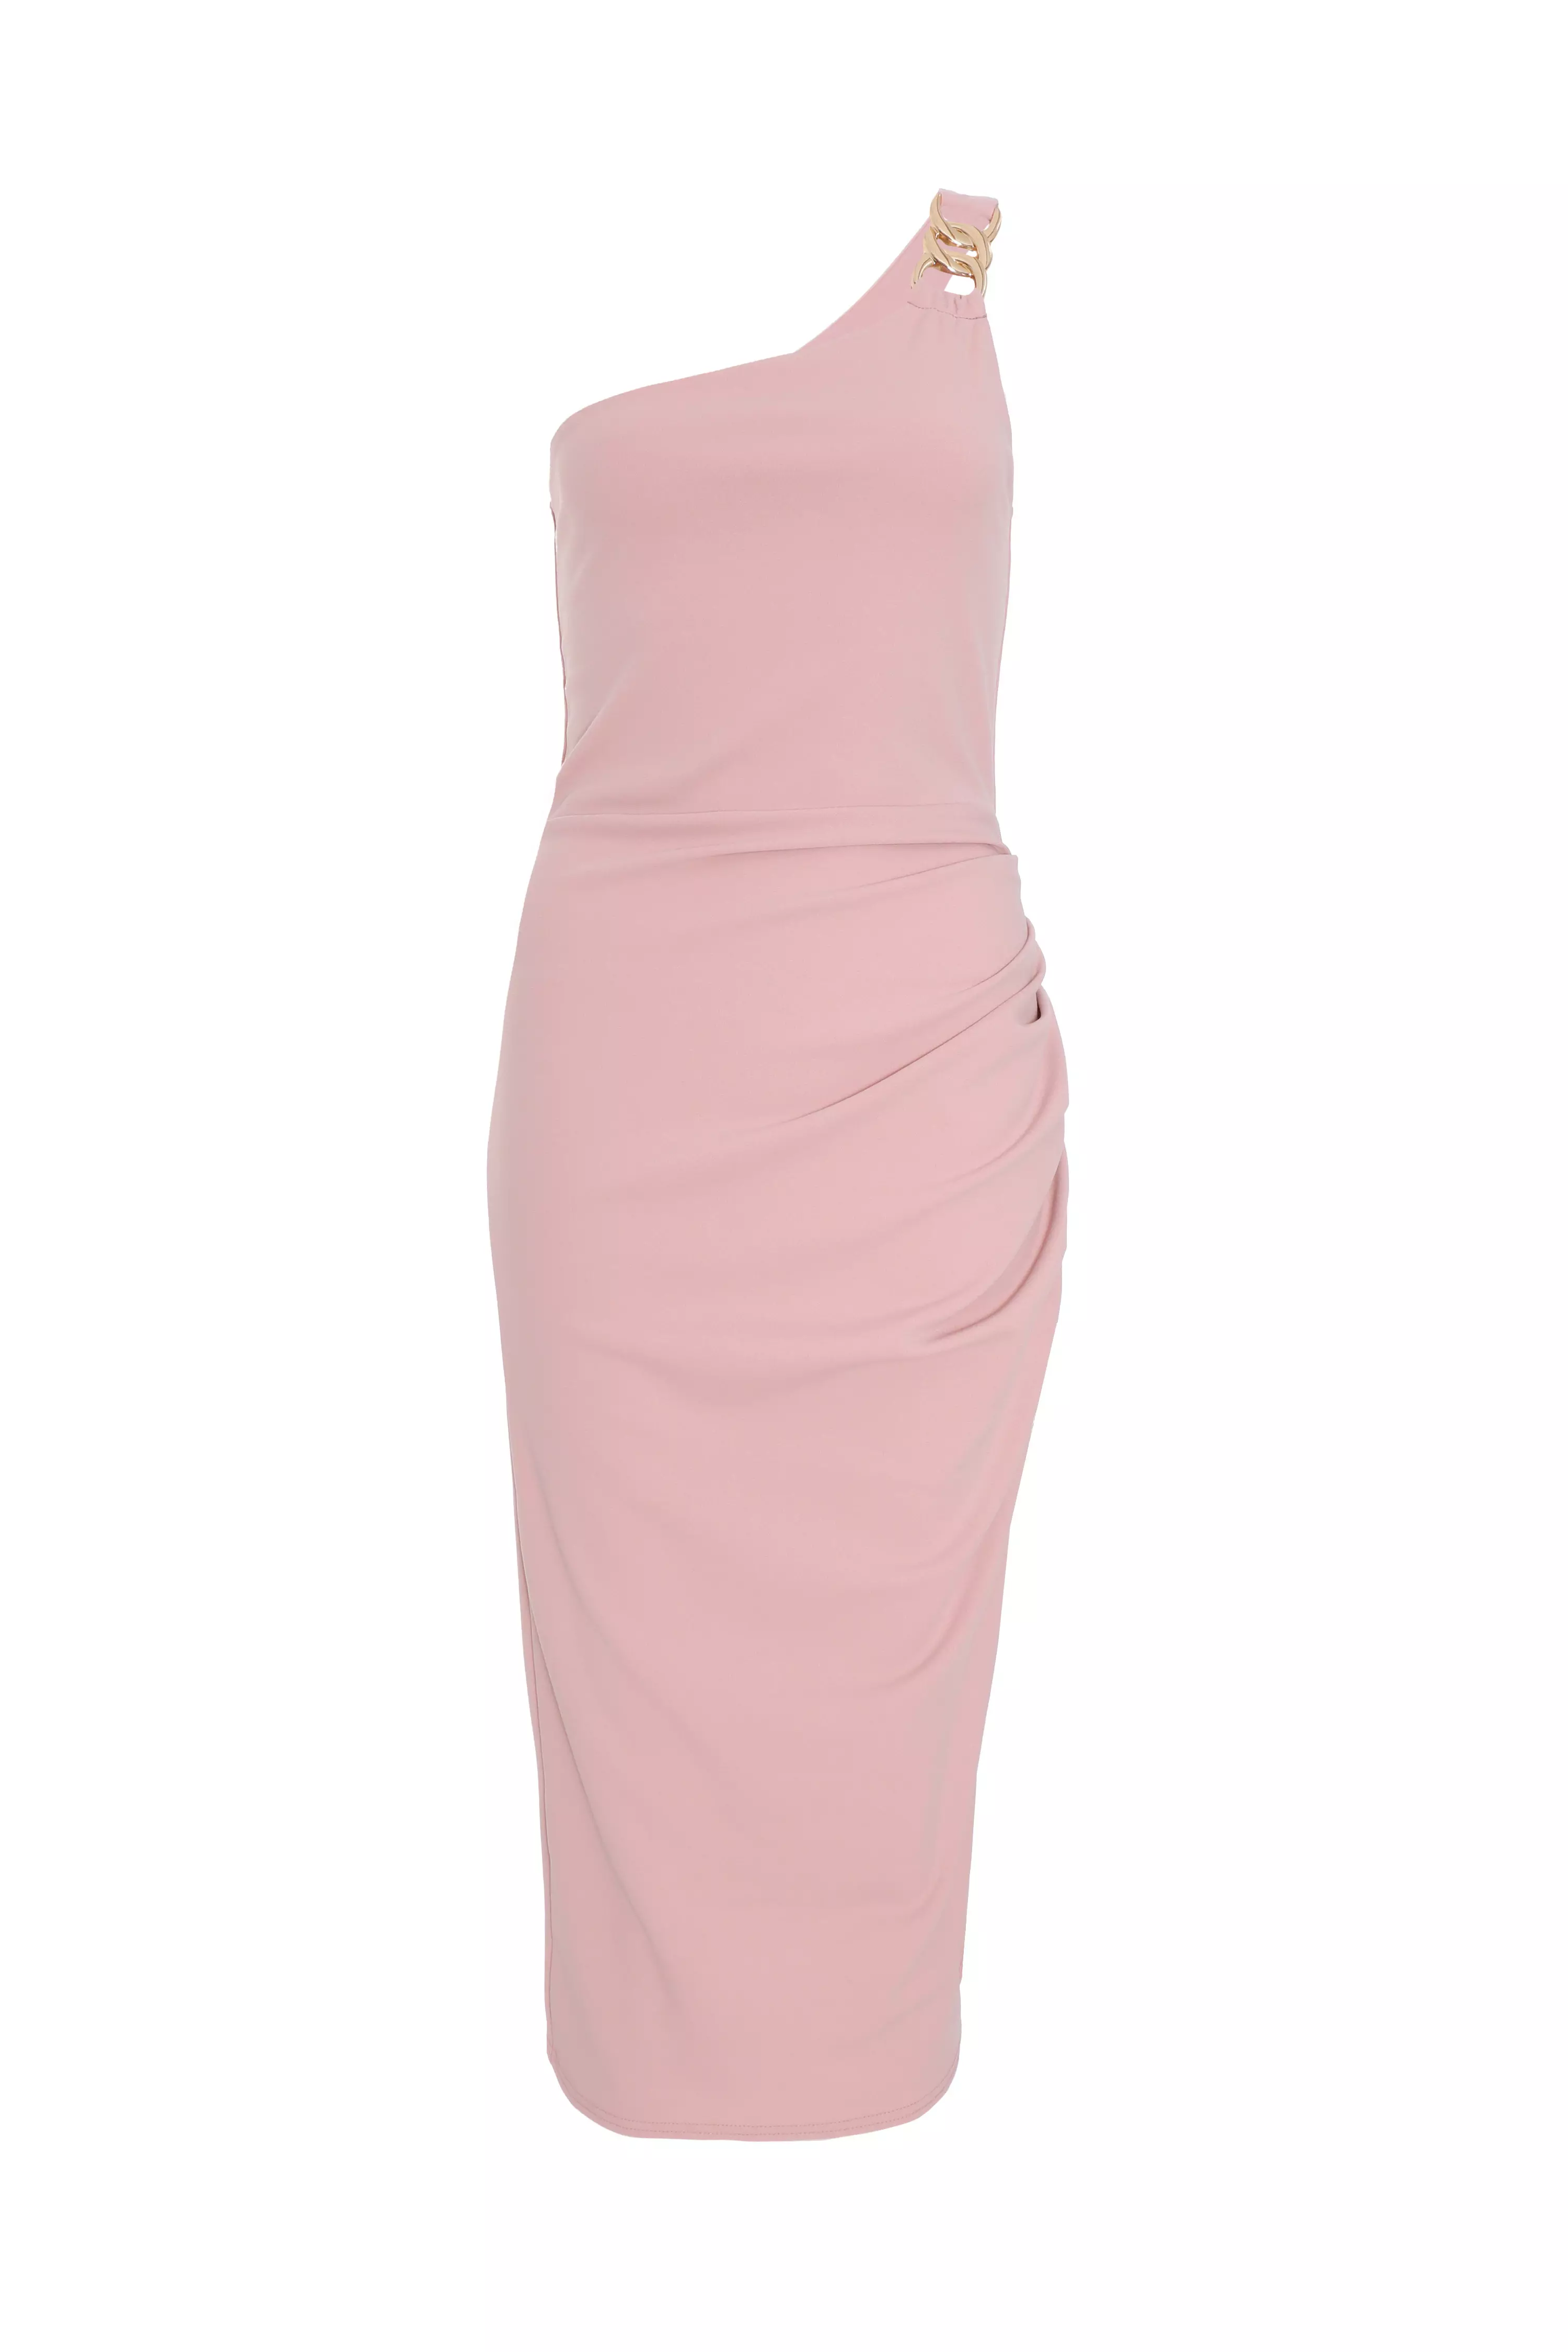 Blush Pink One Shoulder Midi Dress - QUIZ Clothing